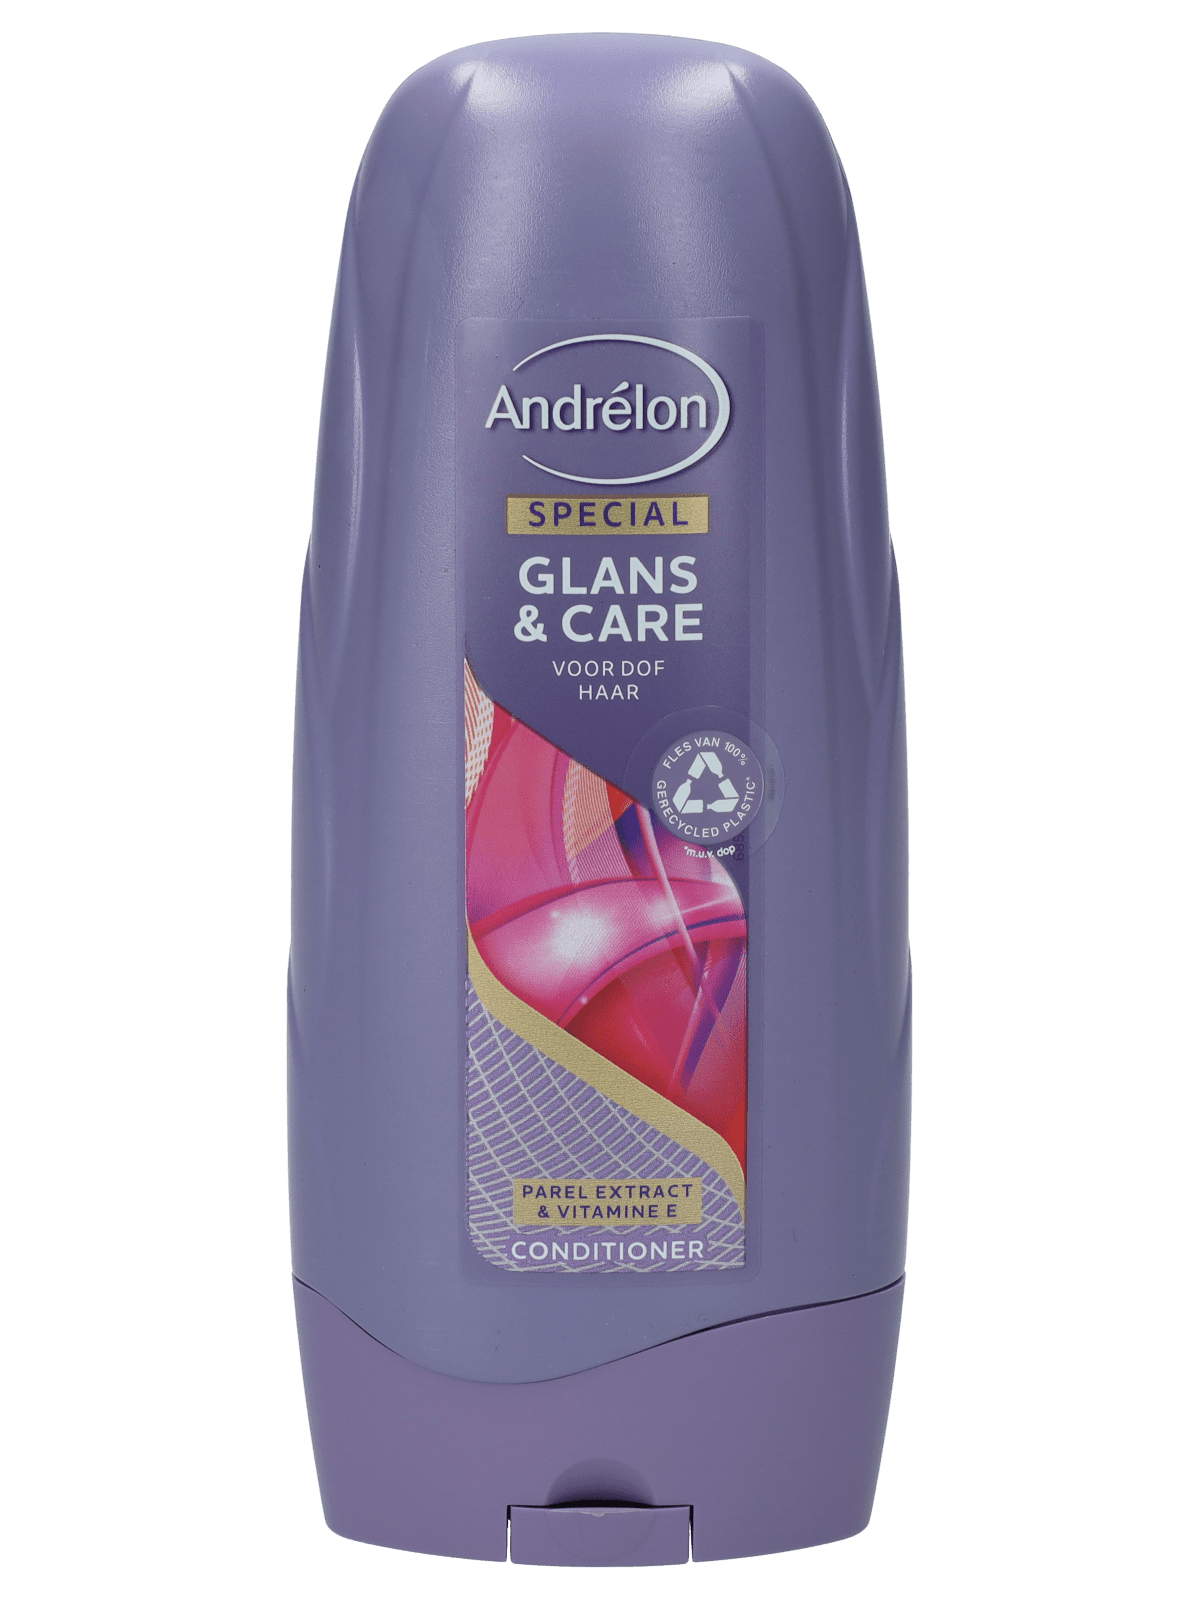 Andrélon après-shampoing Glans & Care - Wibra